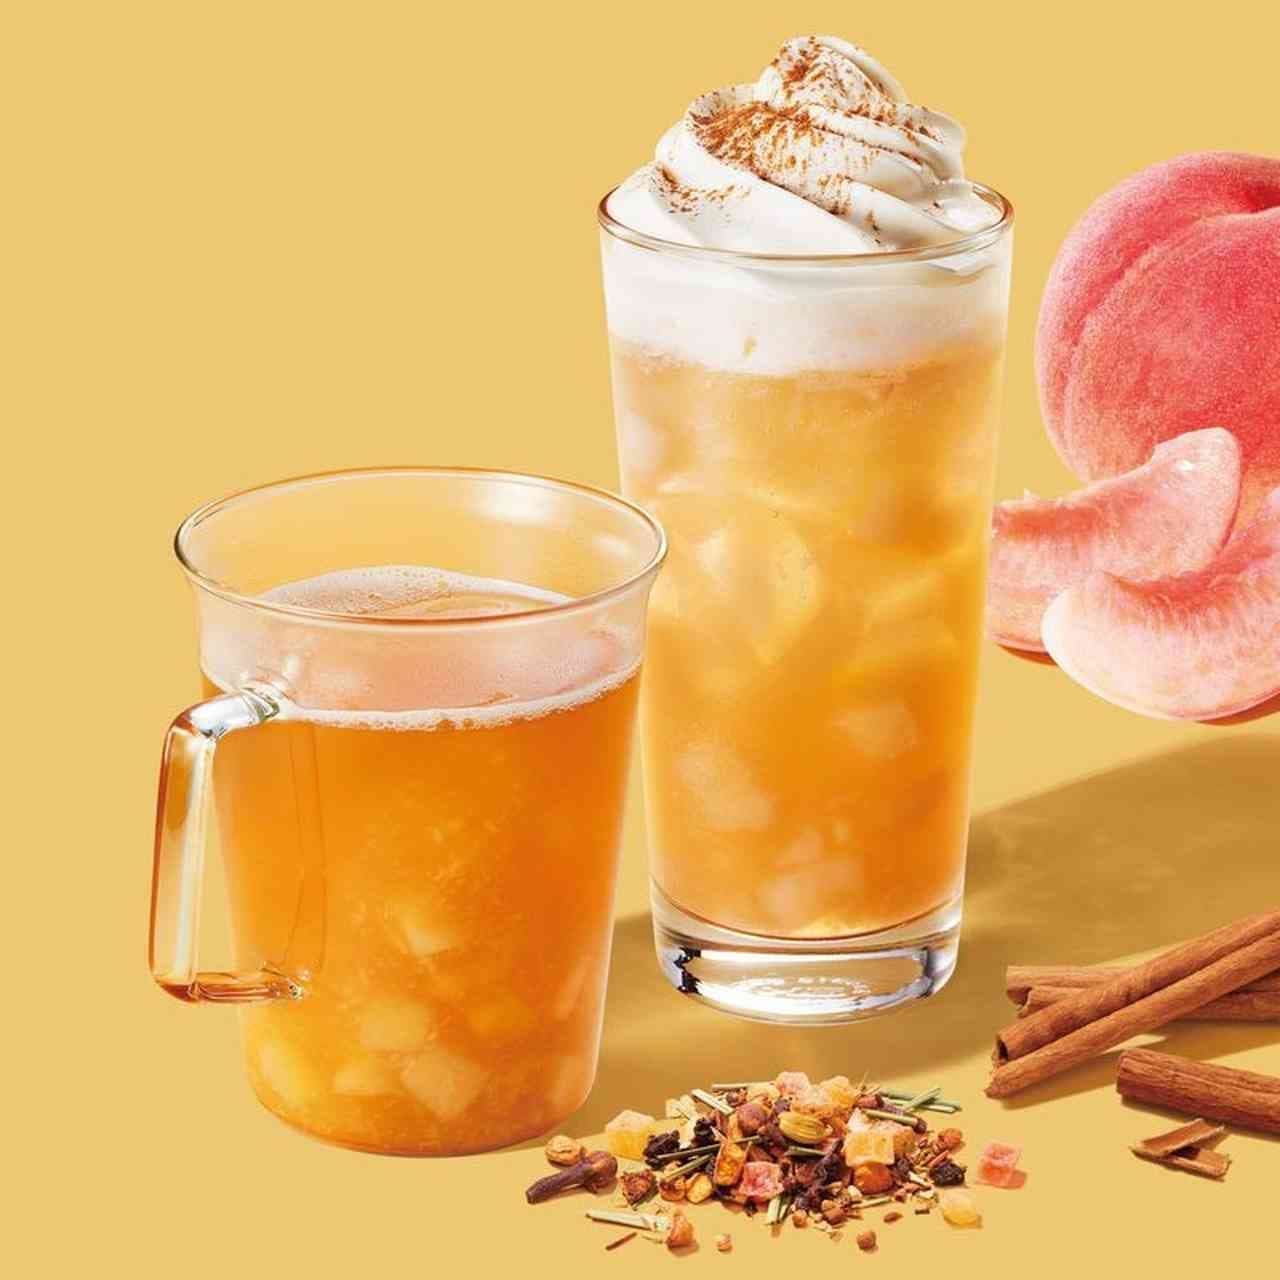 Starbucks Tea & Cafe "Peach & Majestic Chai Tea